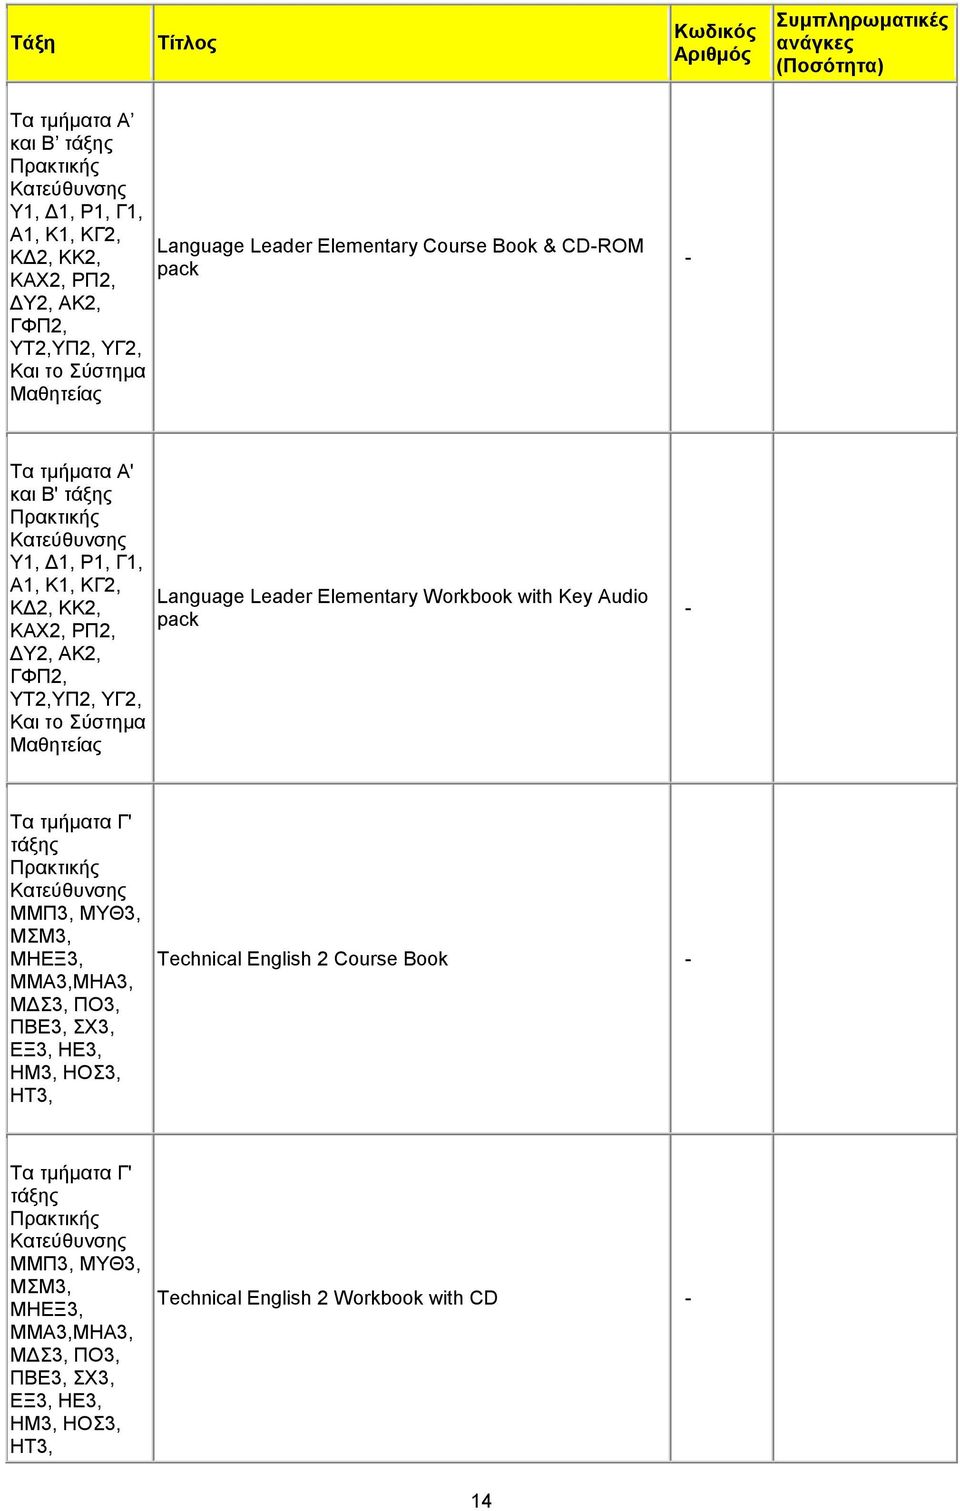 Language Leader Elementary Workbook with Key Audio pack Τα τμήματα Γ' ΜΜΠ3, ΜΥΘ3, ΜΣΜ3, ΜΗΕΞ3, ΜΜΑ3,ΜΗΑ3, ΜΔΣ3, ΠΟ3, ΠΒΕ3, ΣΧ3, ΕΞ3, ΗΕ3, ΗΜ3, ΗΟΣ3, ΗΤ3,